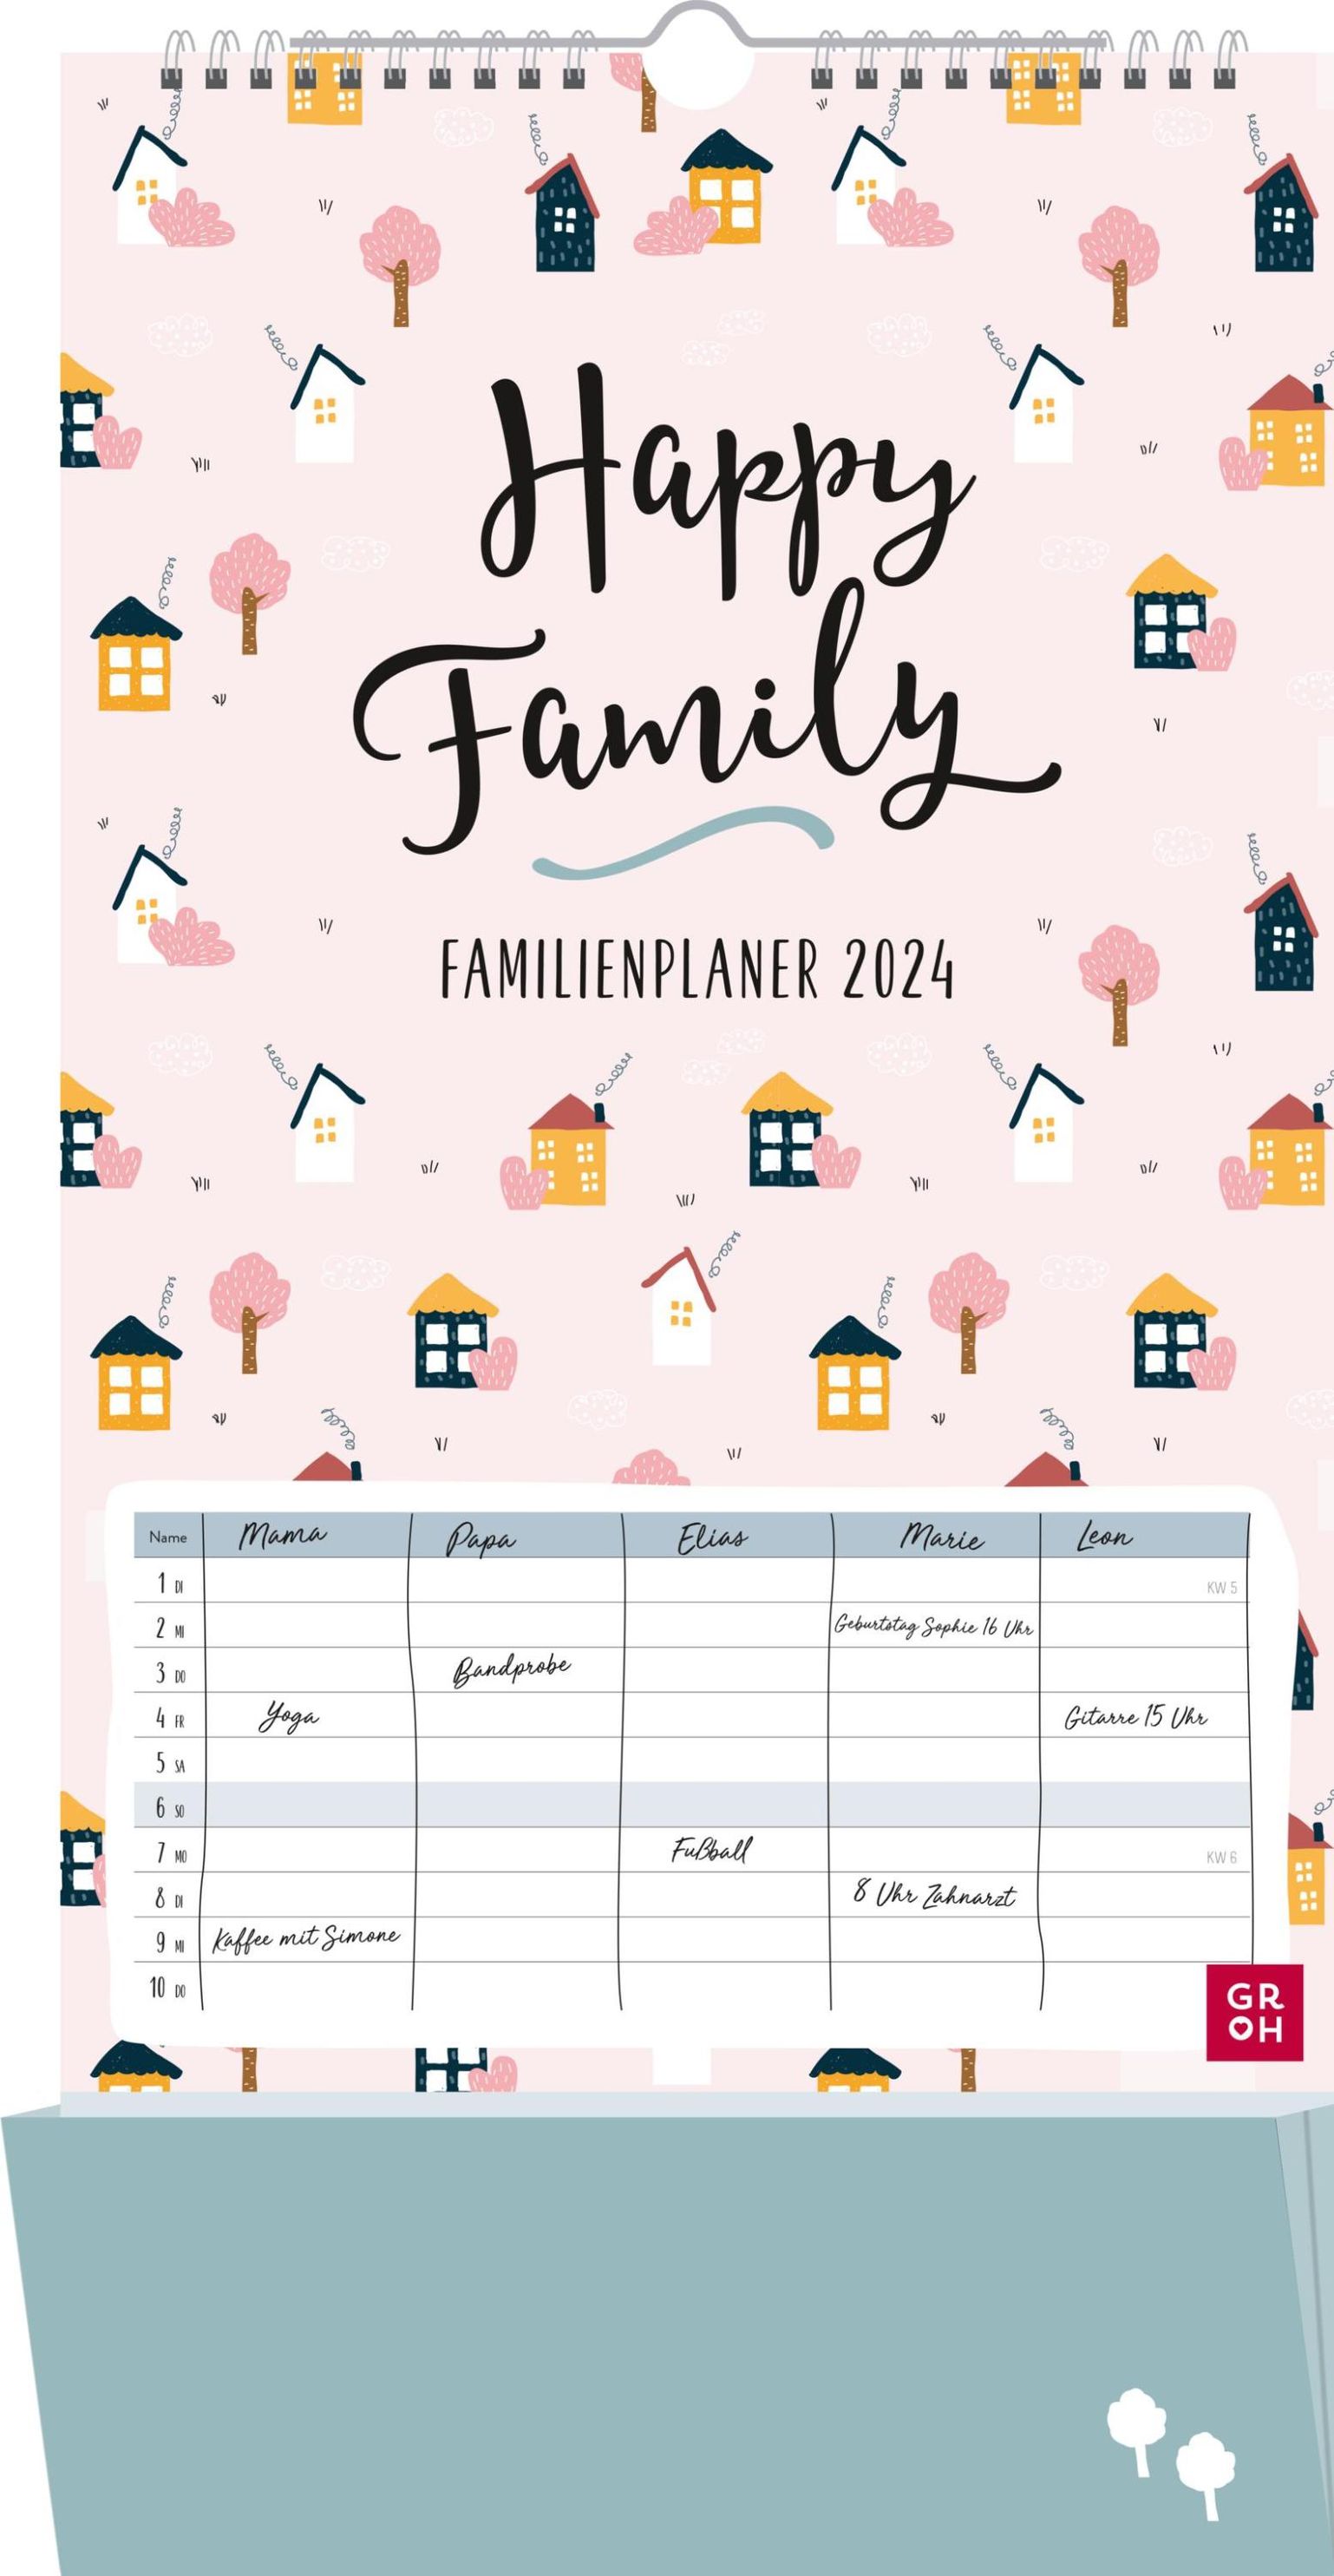 Happy Family - Familienplaner 2024 - Kalender bei Weltbild.de